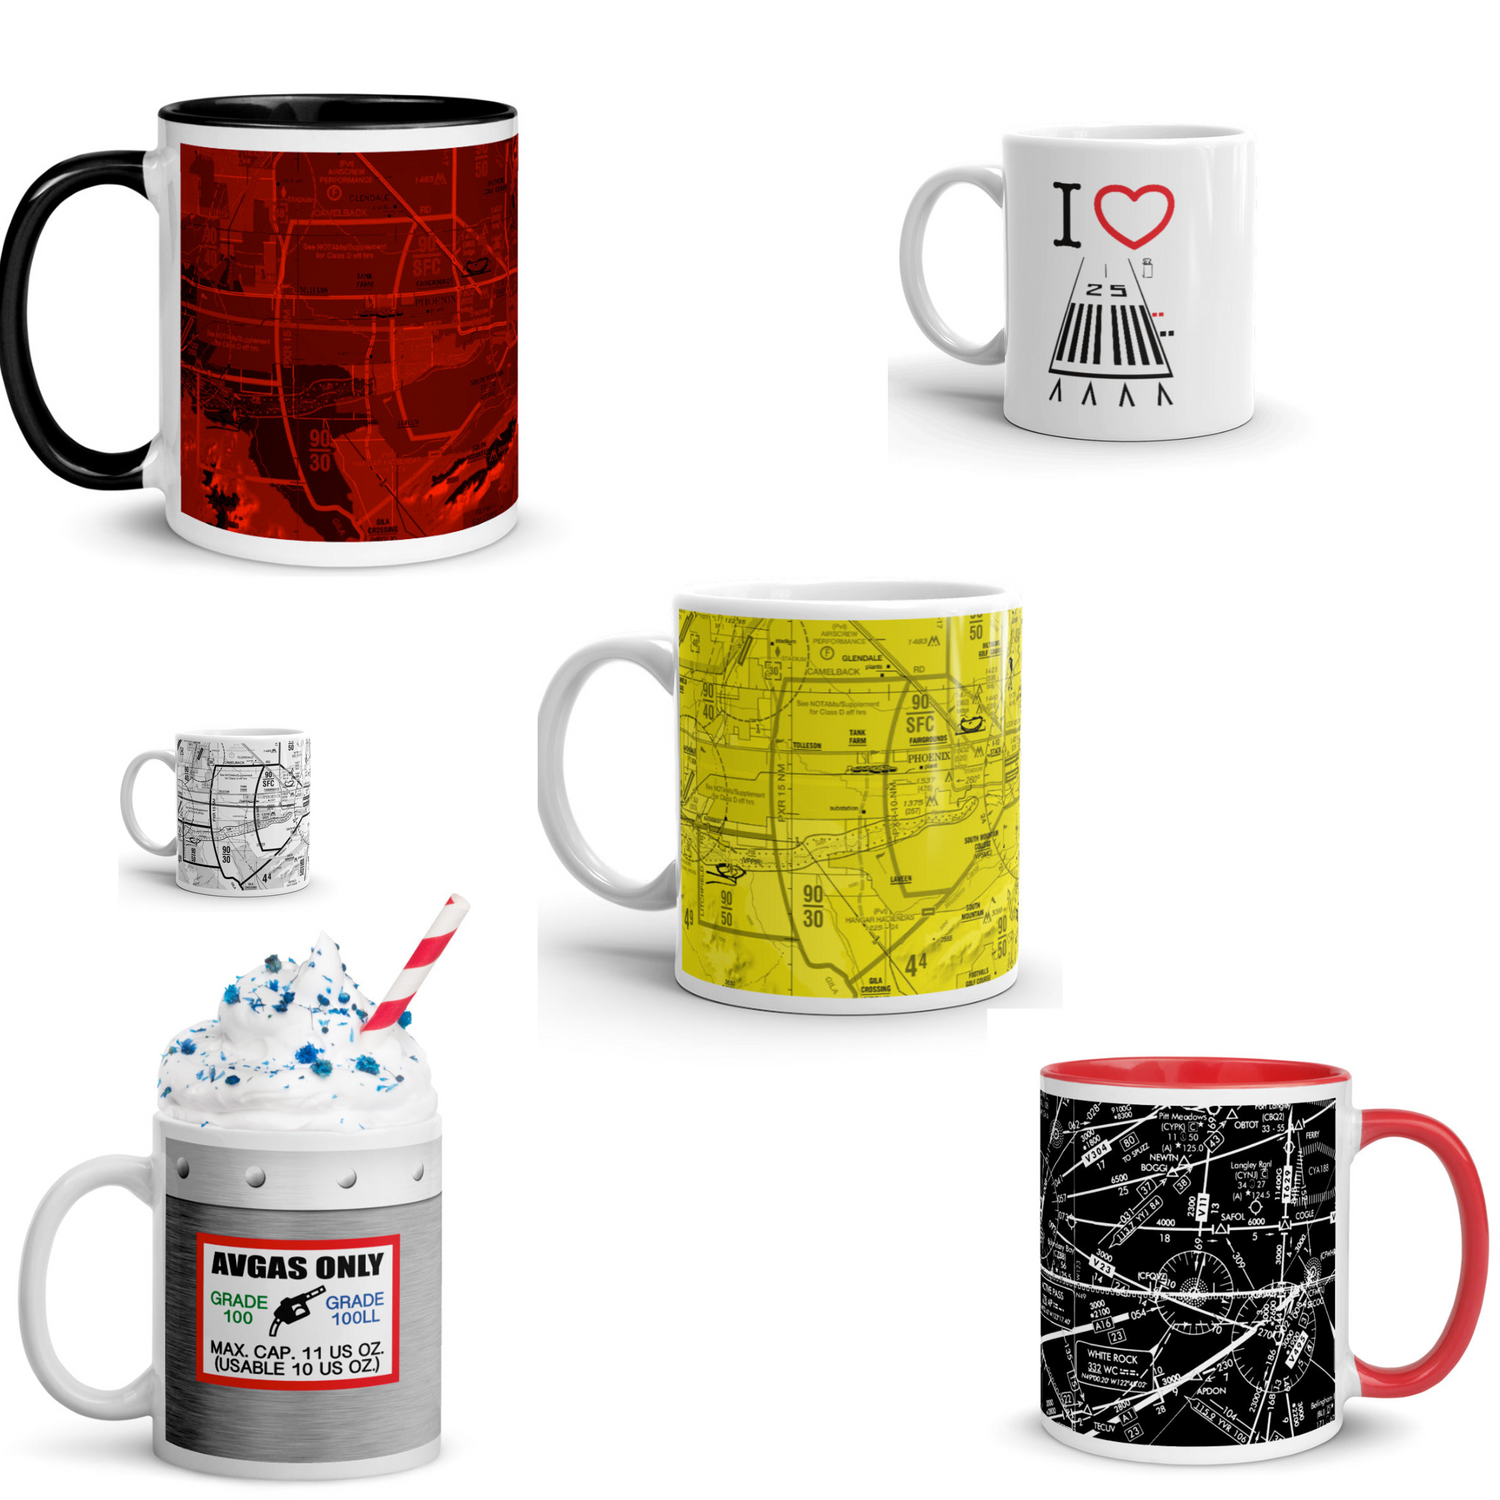 11 oz. aviation themed ceramic mugs